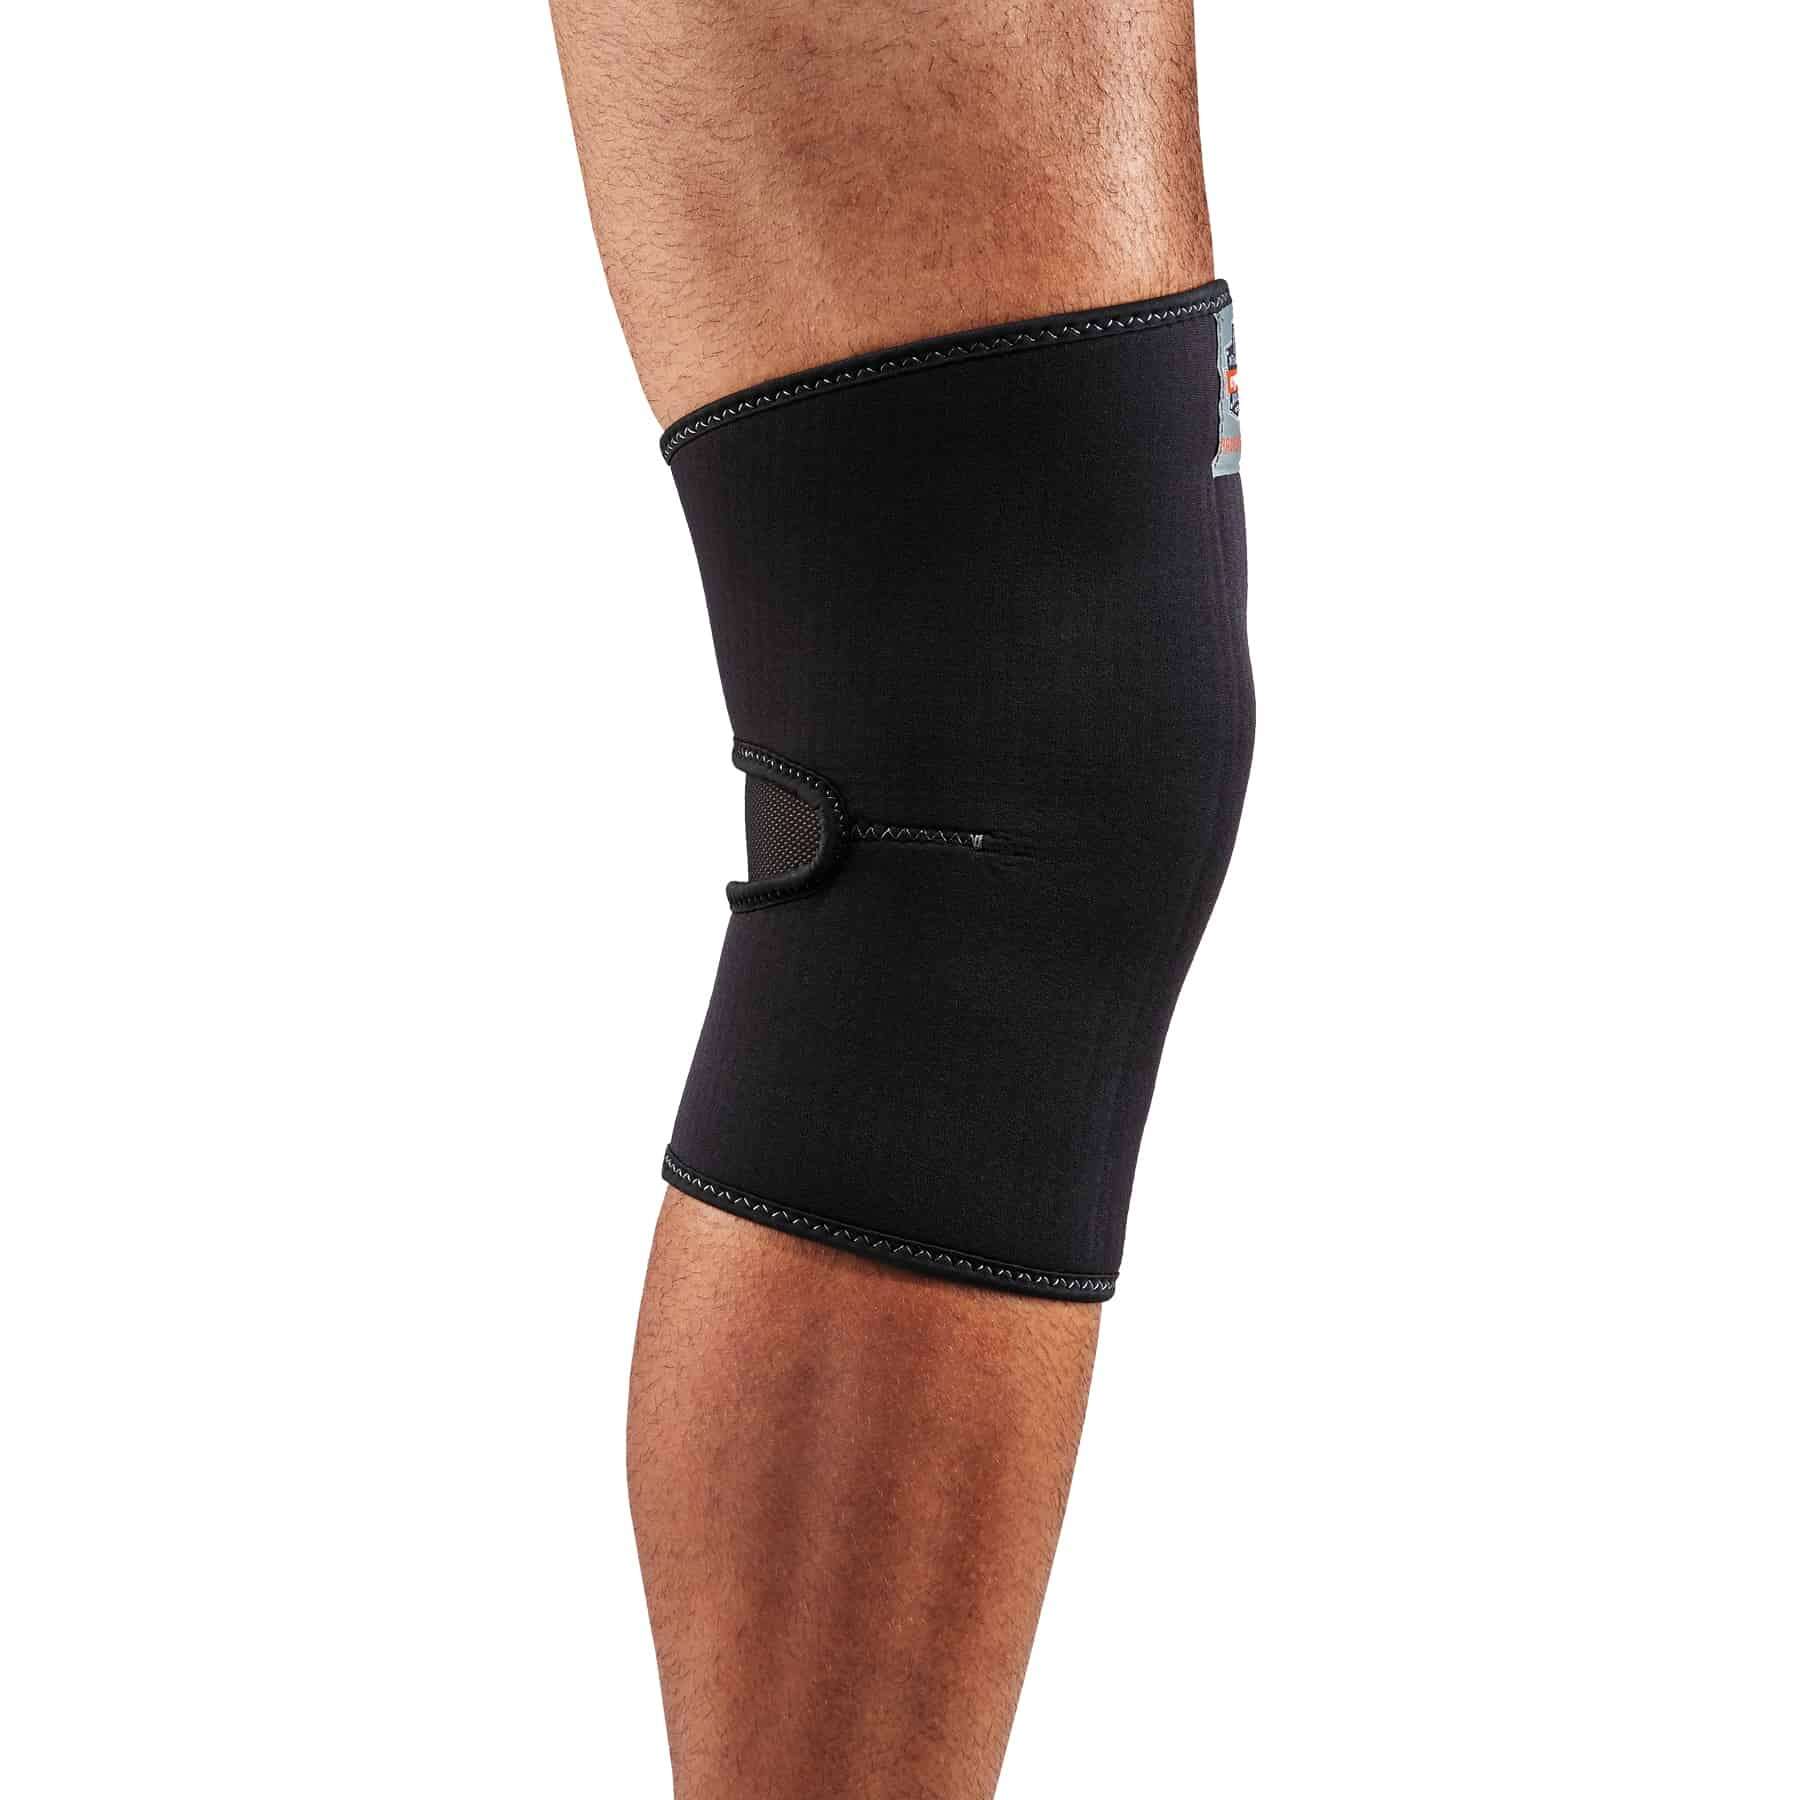 Single Layer Neoprene Knee Sleeve - Knee Supports